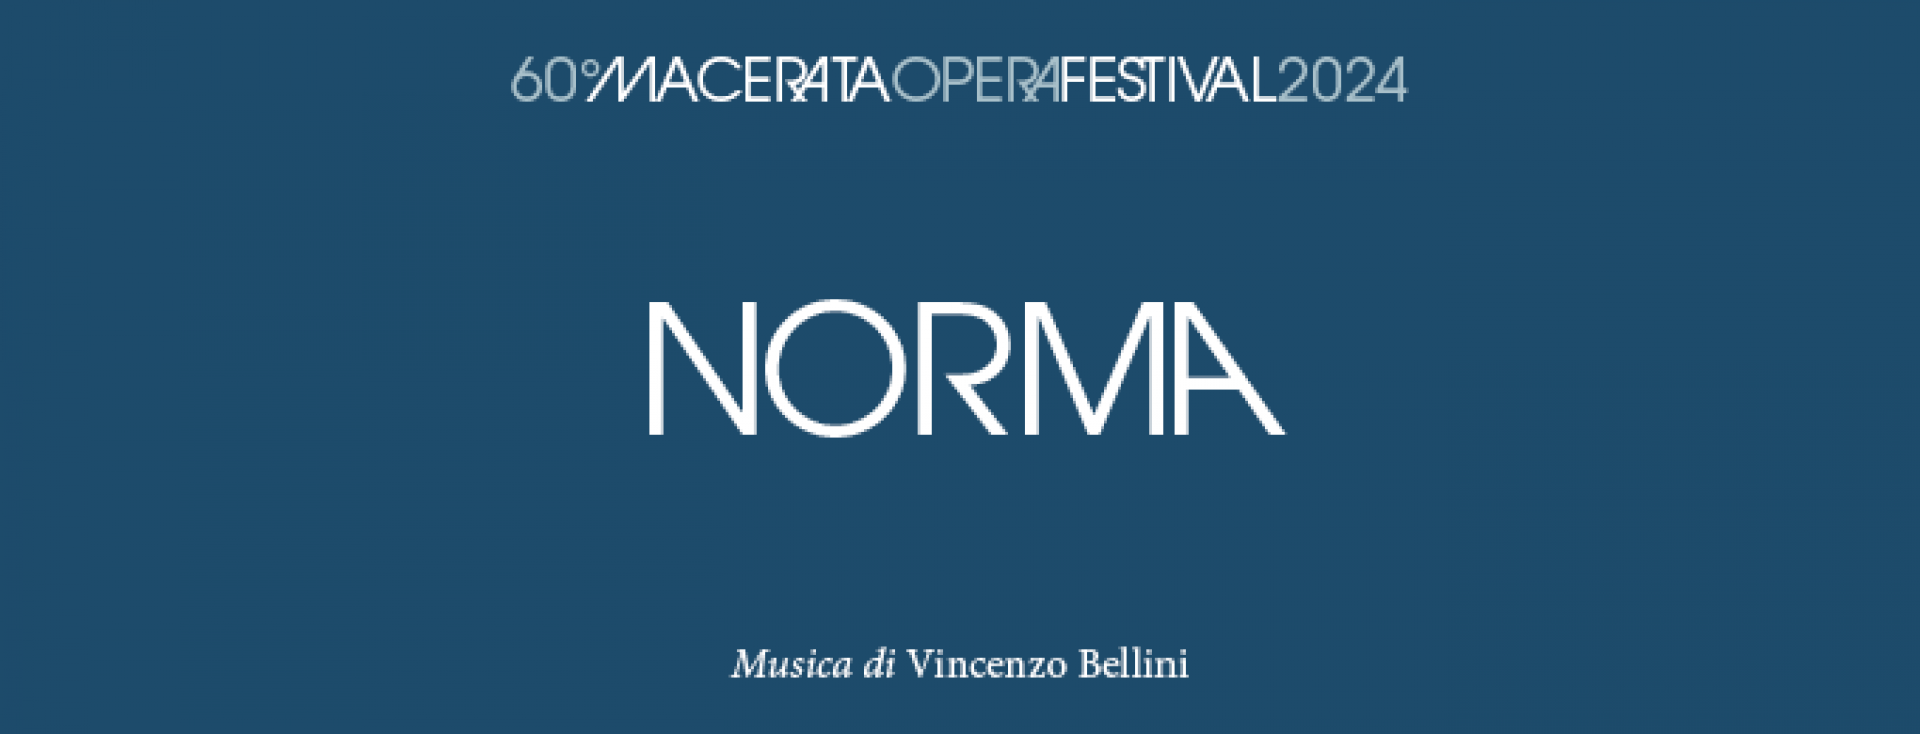 Norma -Macerata Opera Festival 2024